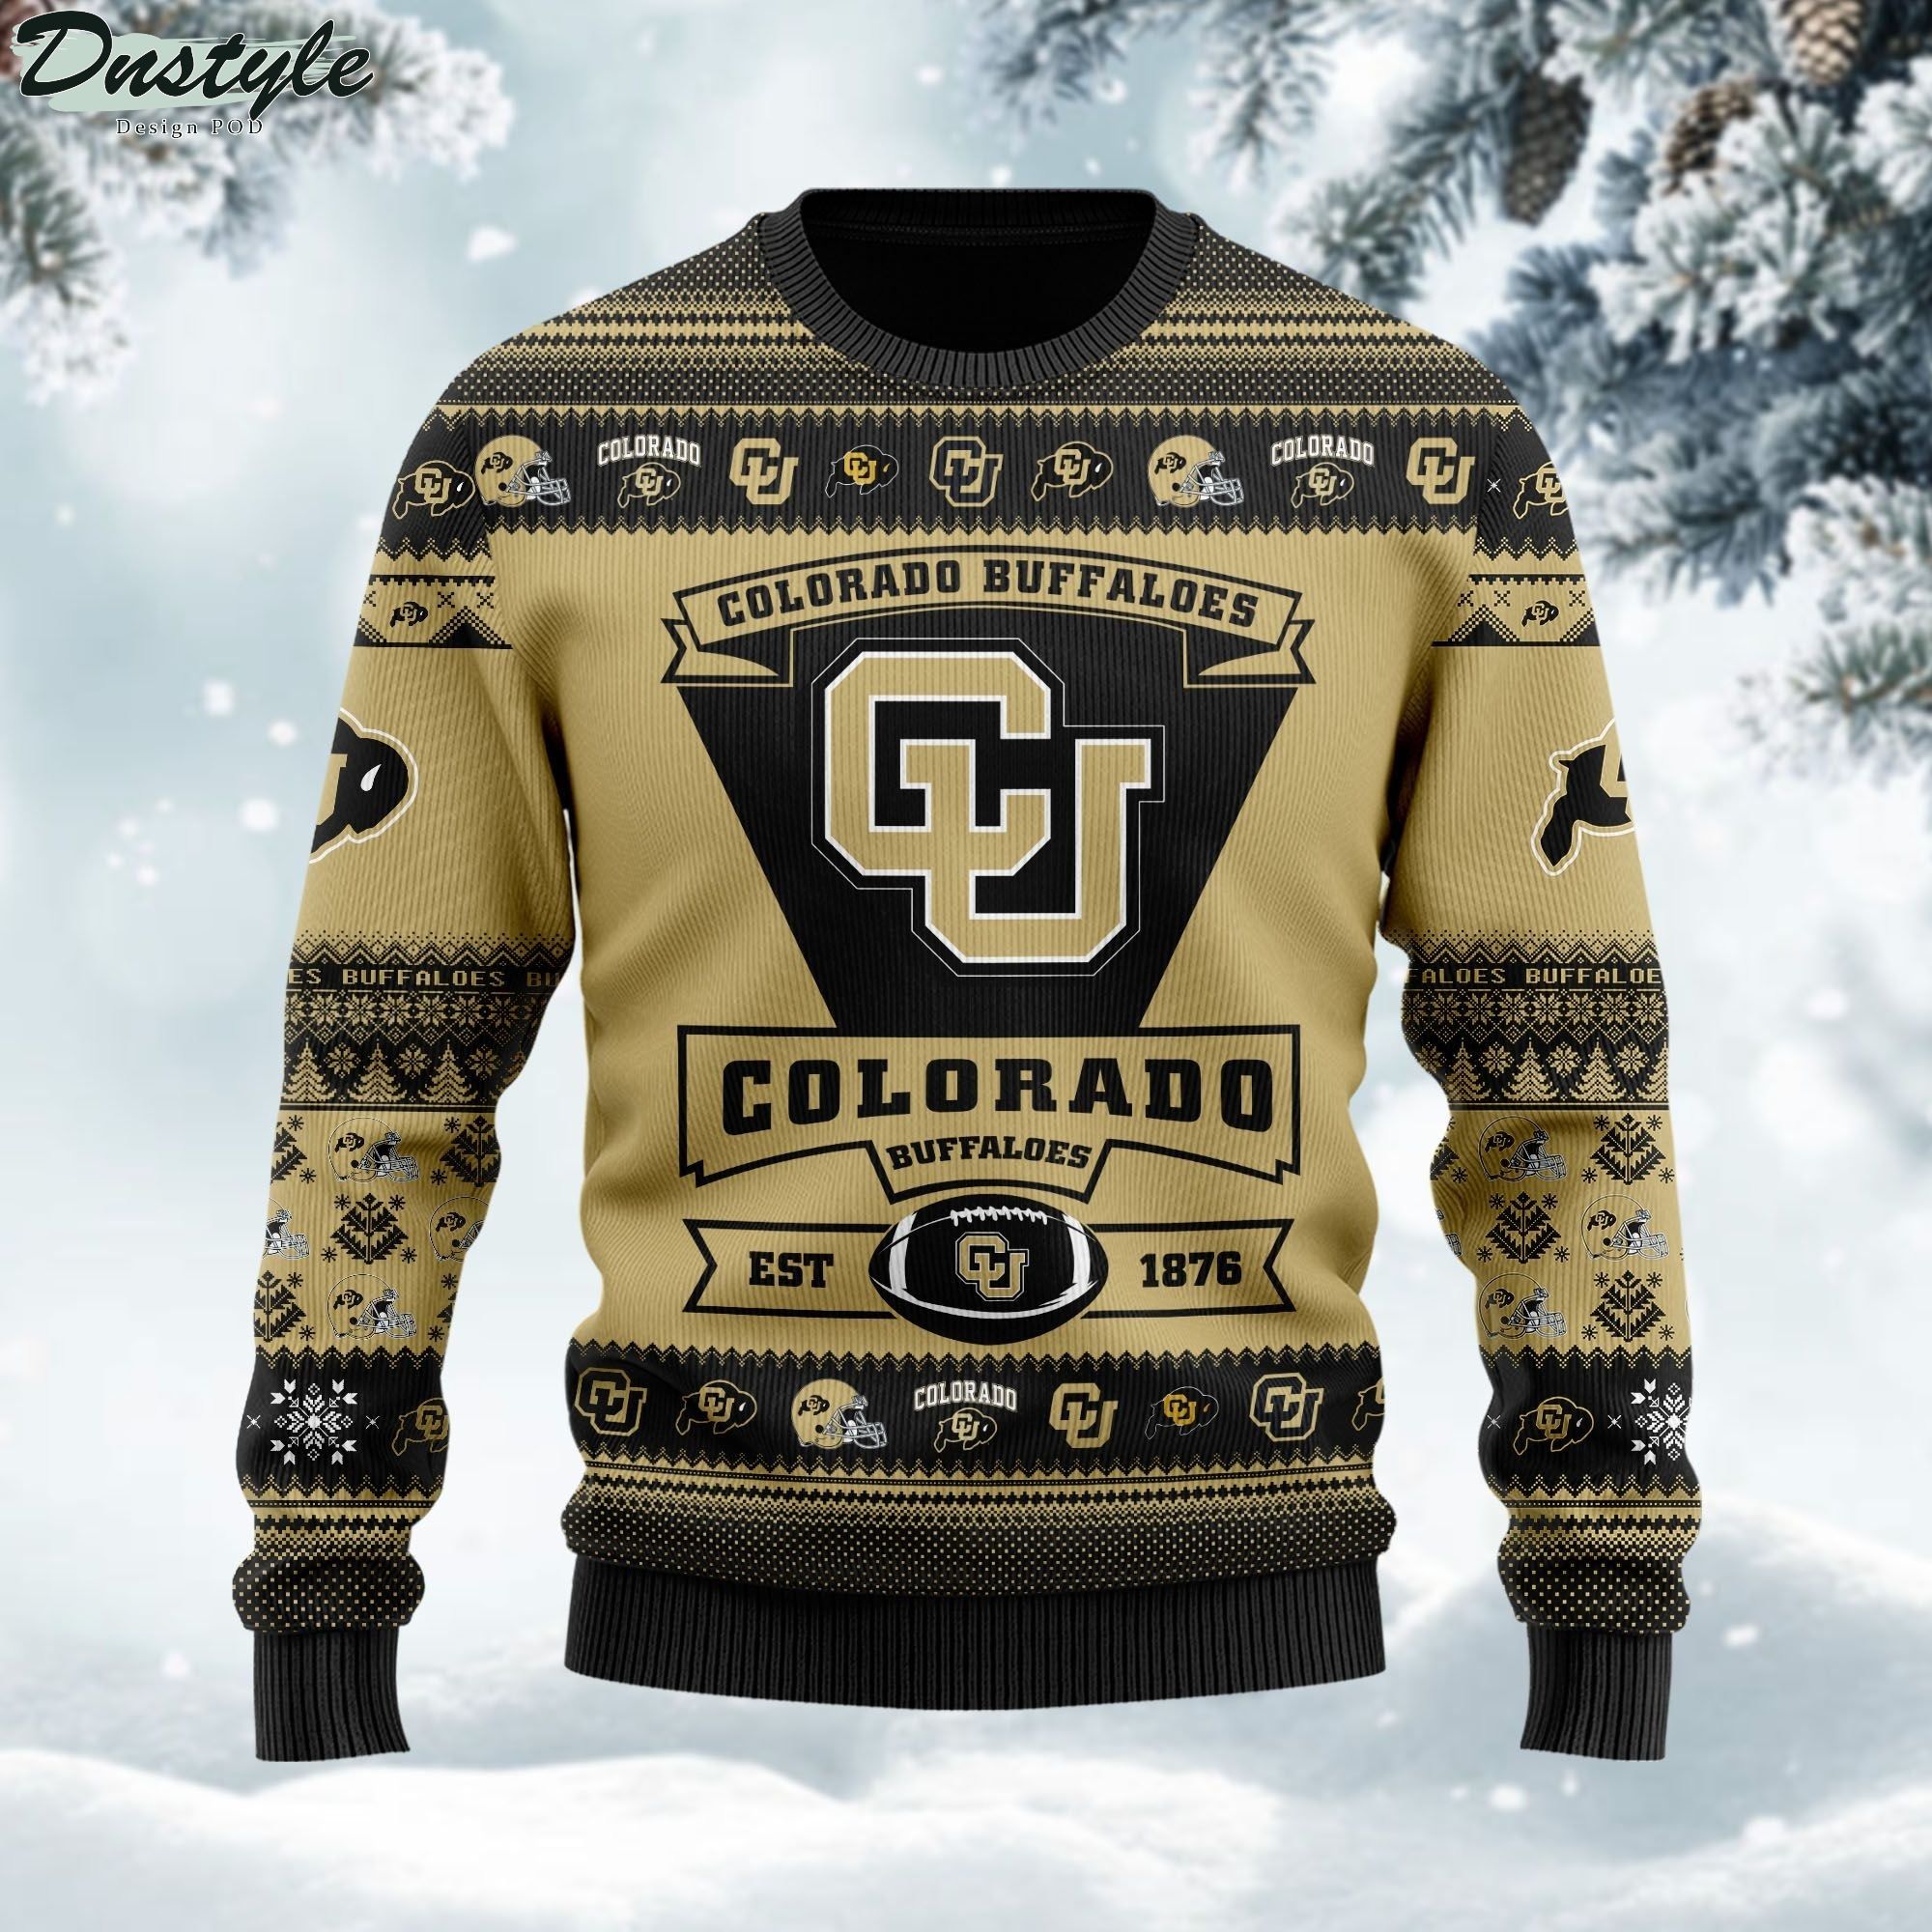 Colorado Buffaloes Football Team Logo Custom Name Personalized Ugly Christmas Sweater